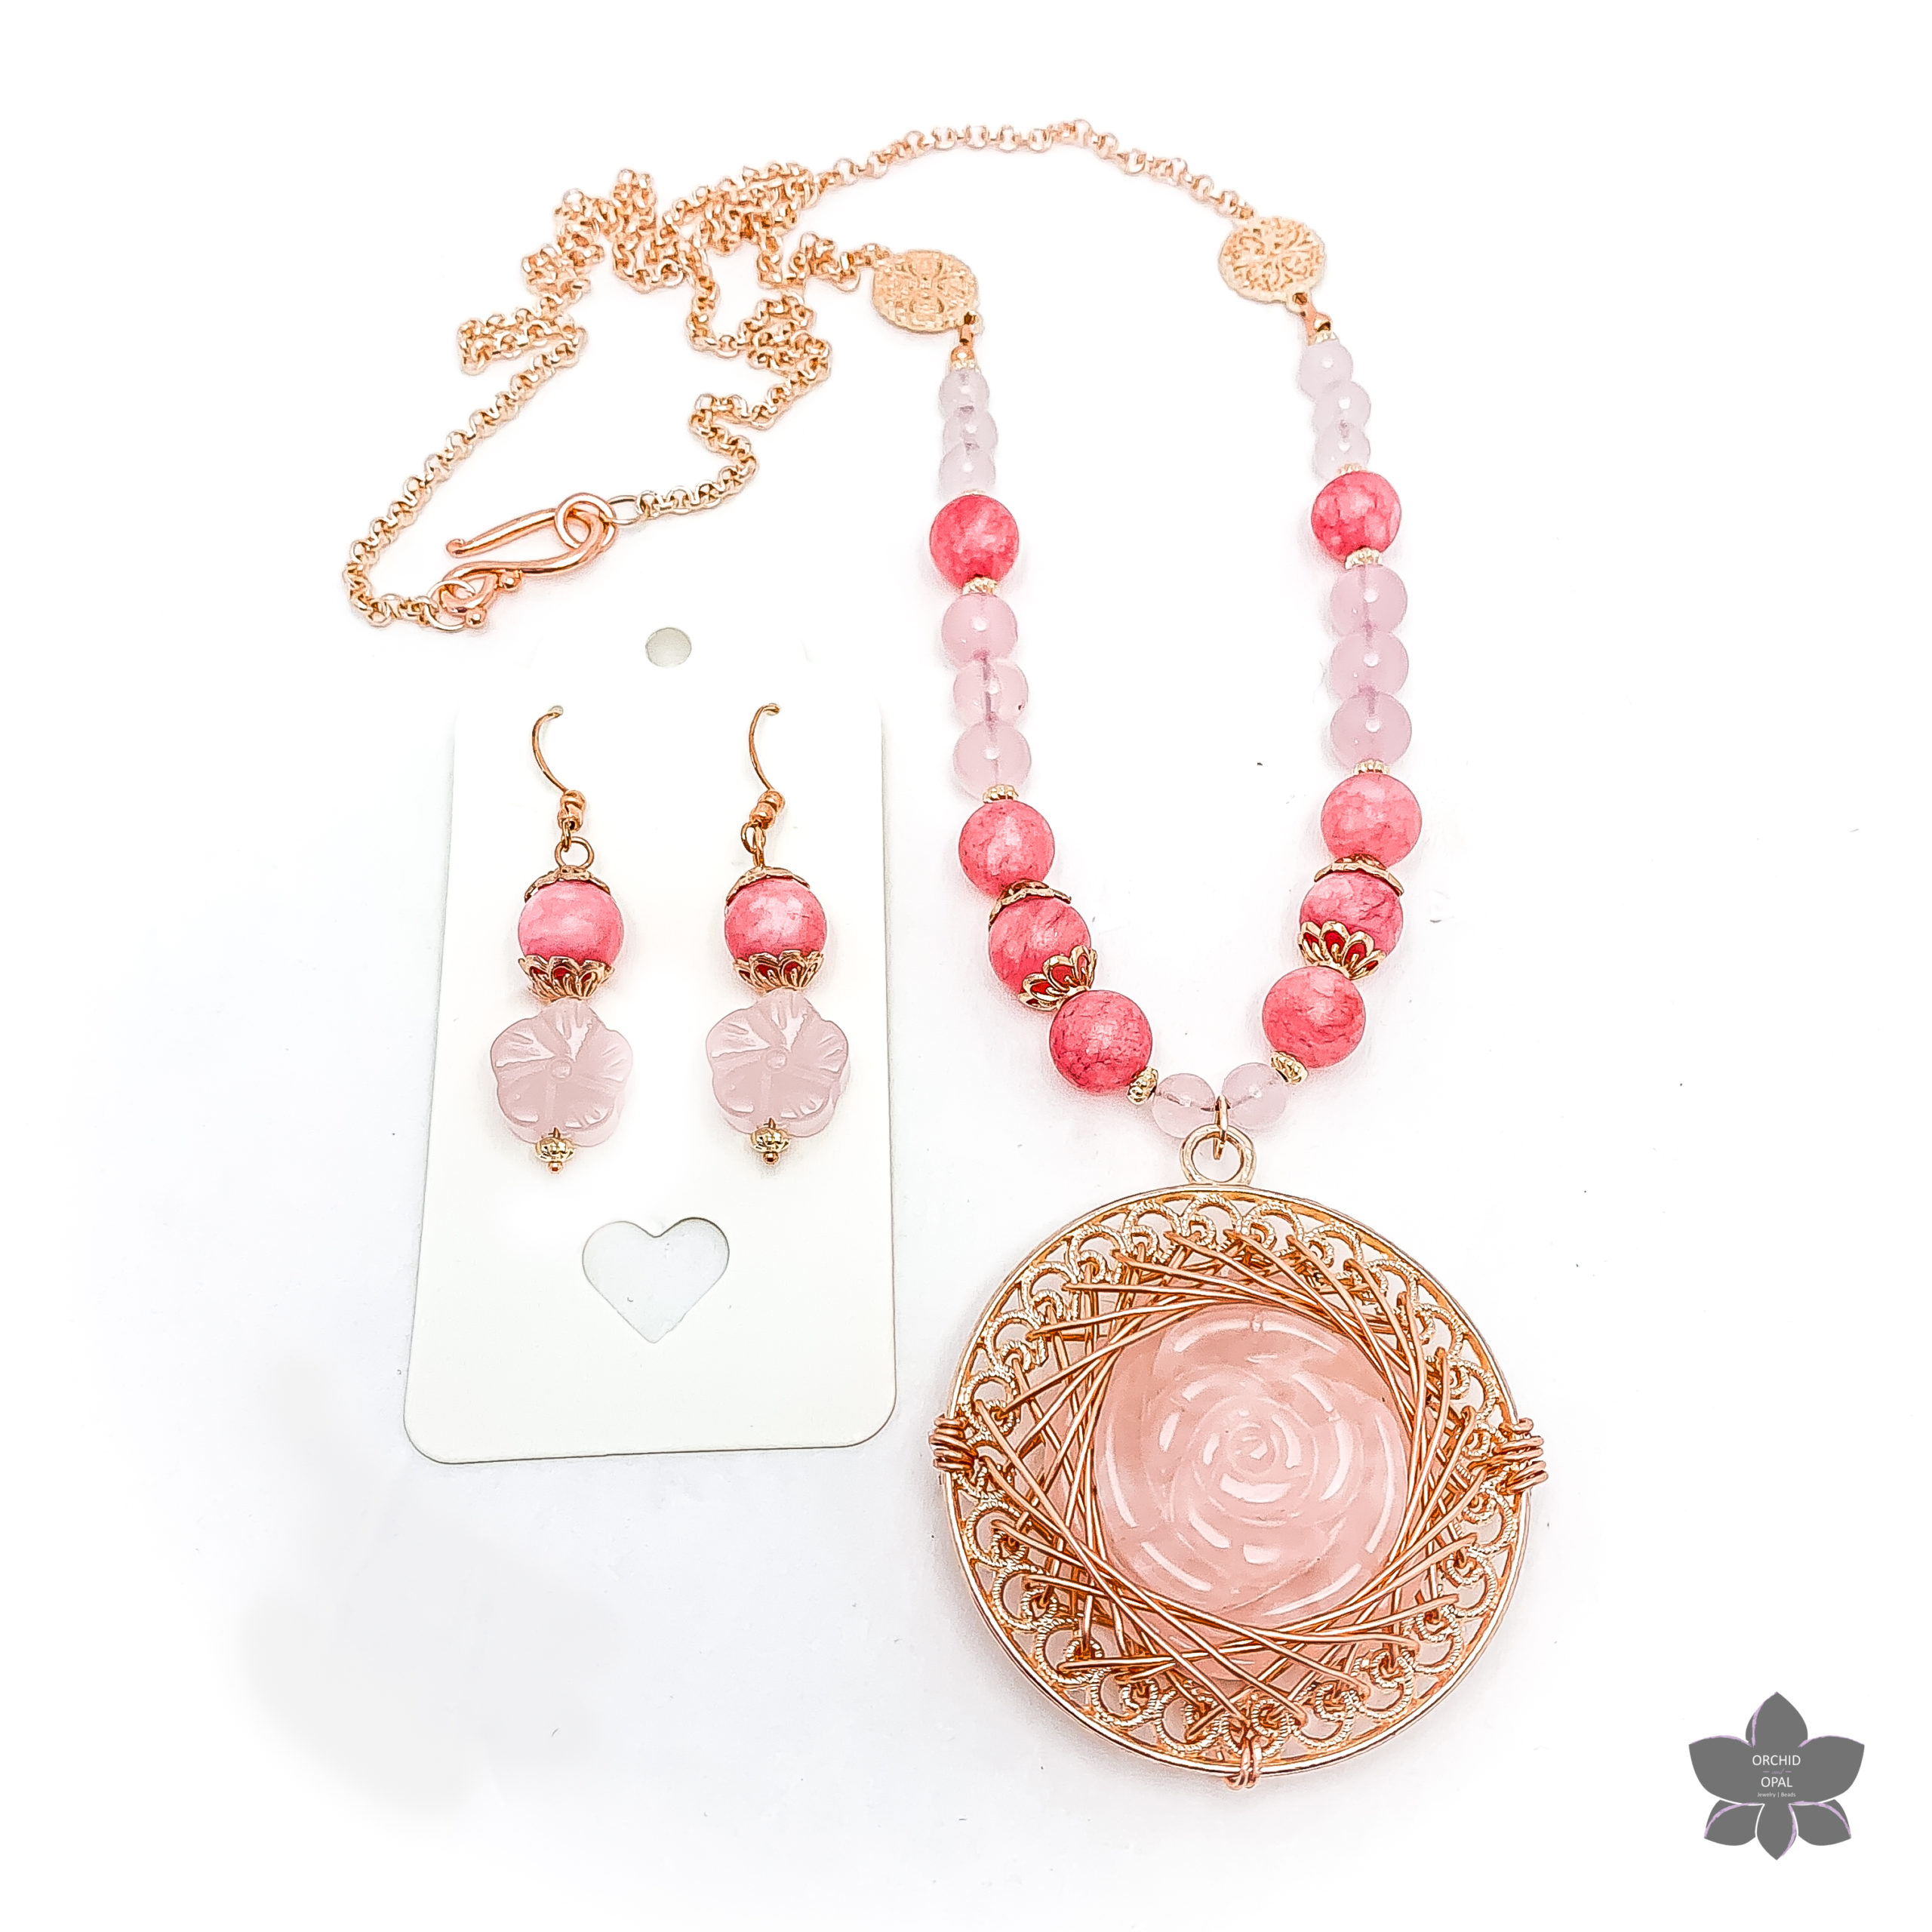 Carved Rose Quartz Pendant Necklace Set | ORCHID and OPAL